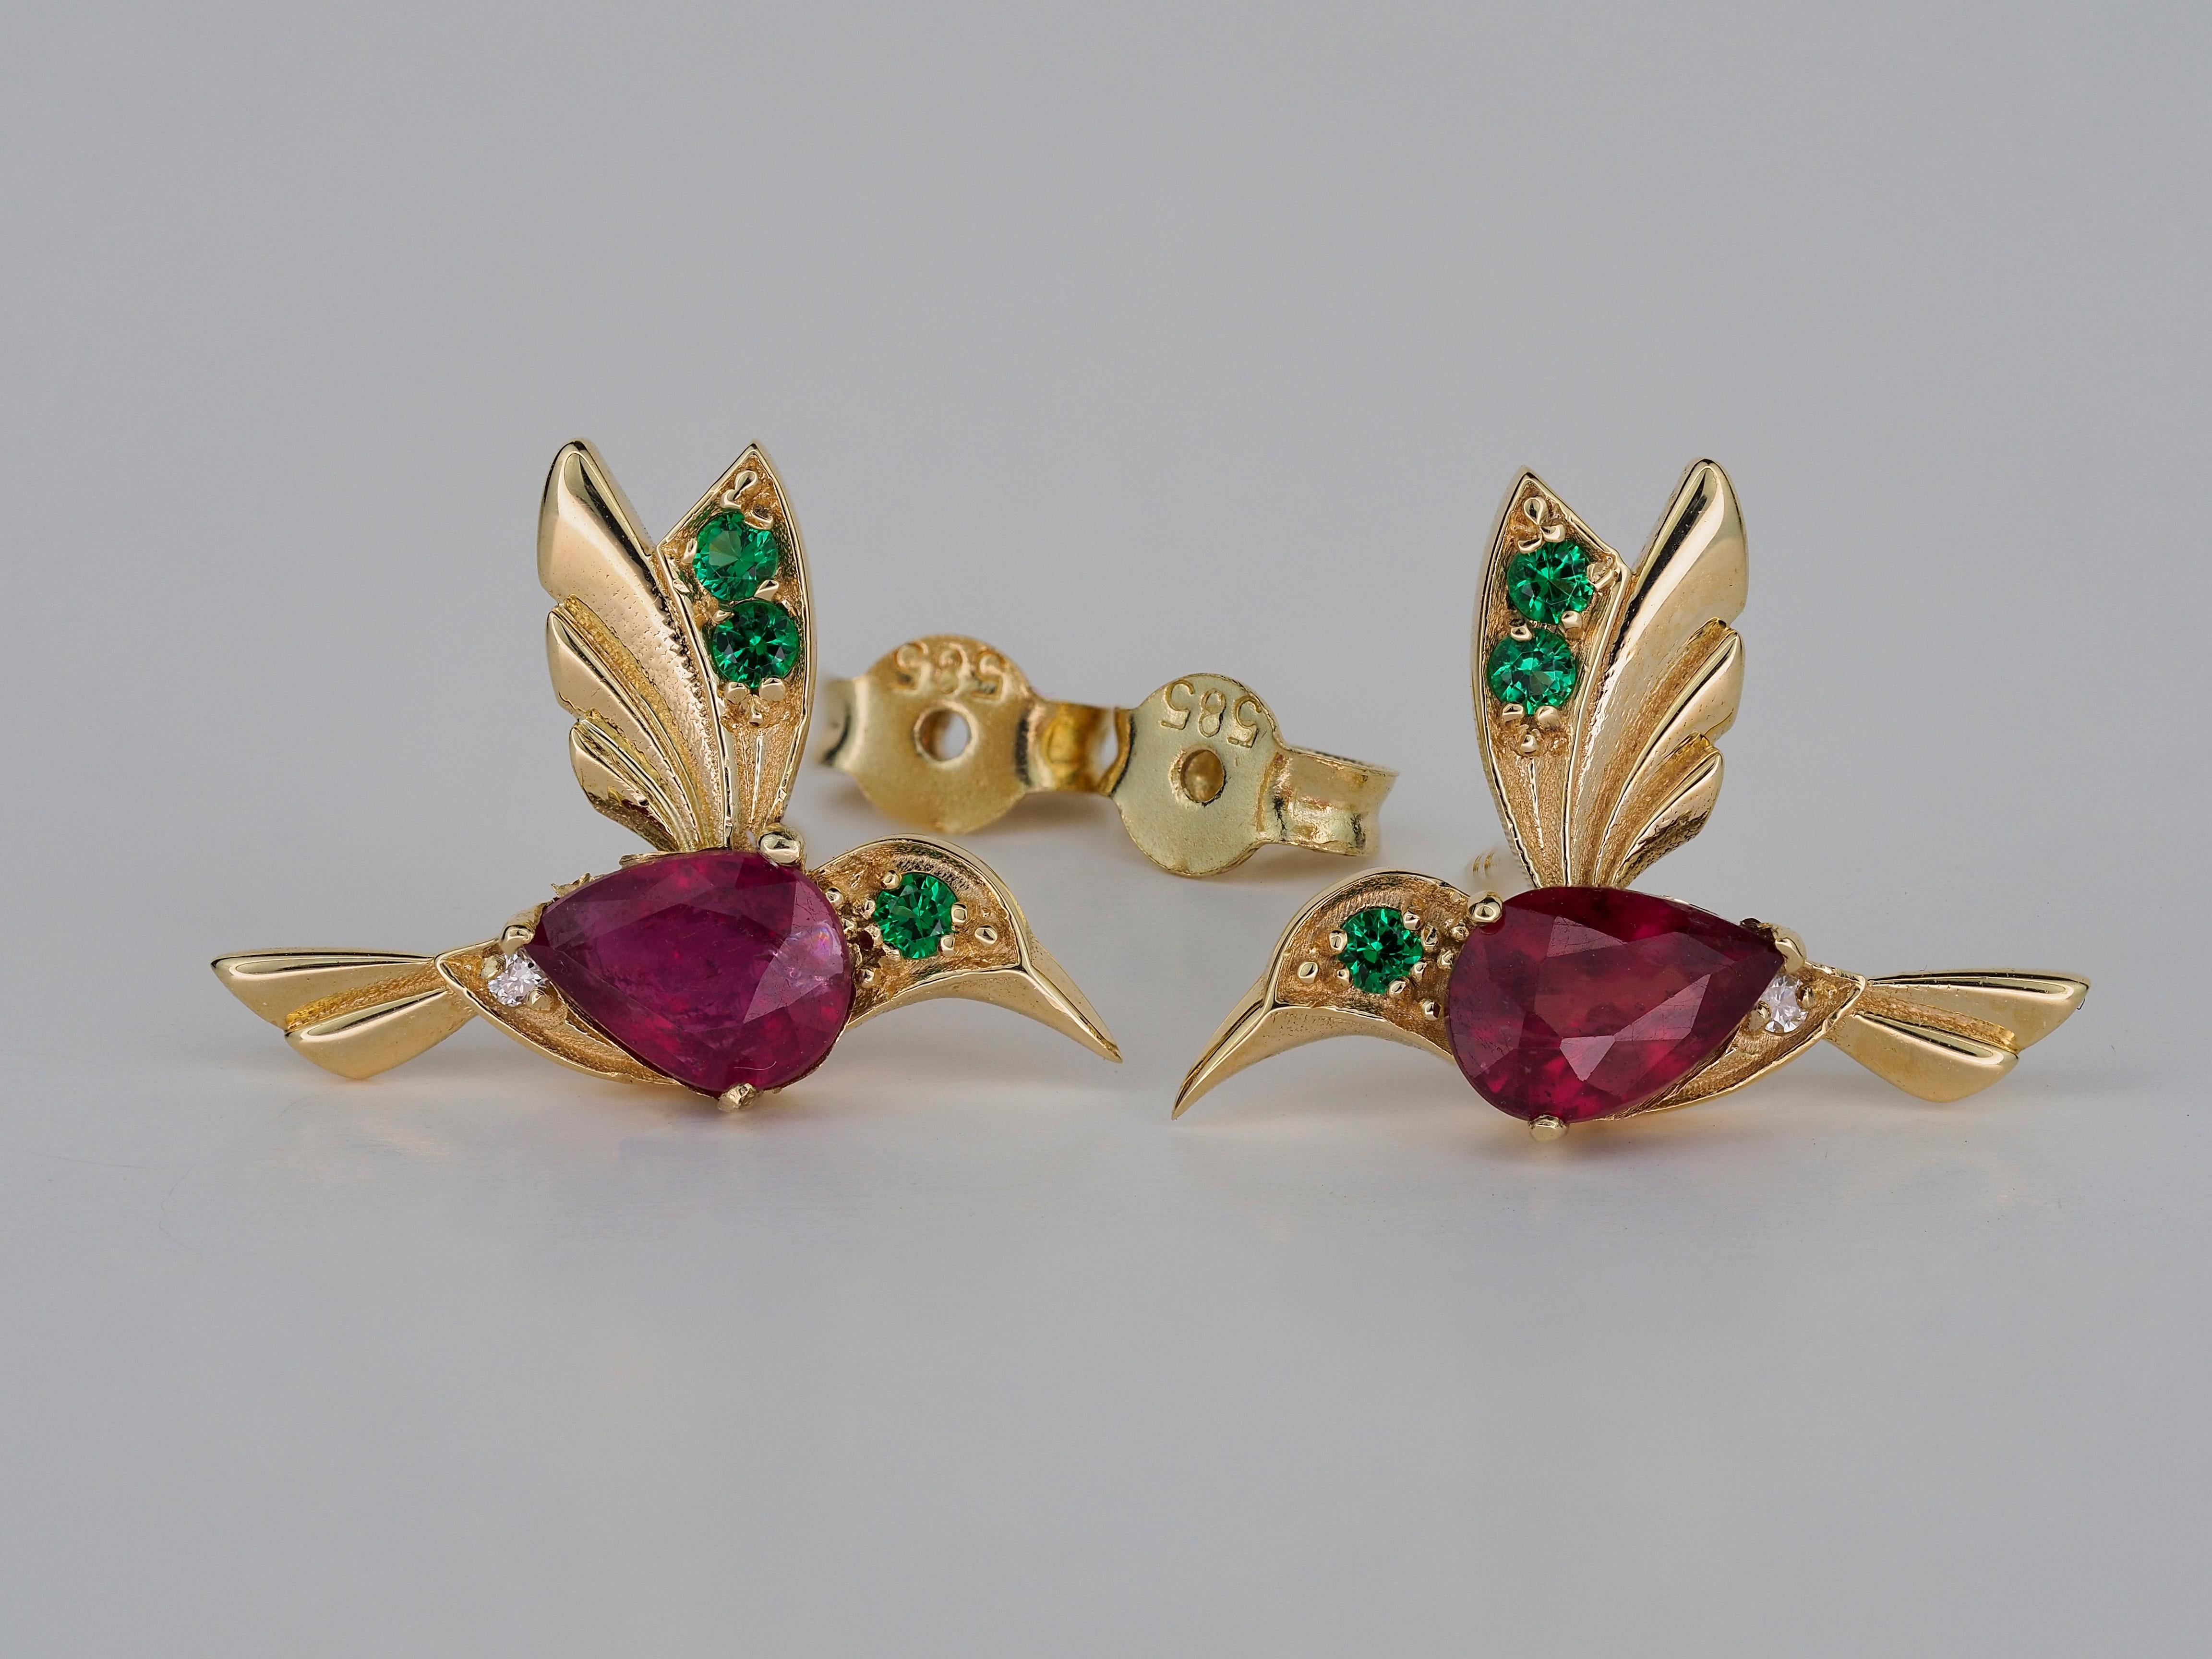 Modern 14k Gold Hummingbird Earings Studs with Rubies, Bird Stud Earrings with Gems ! For Sale